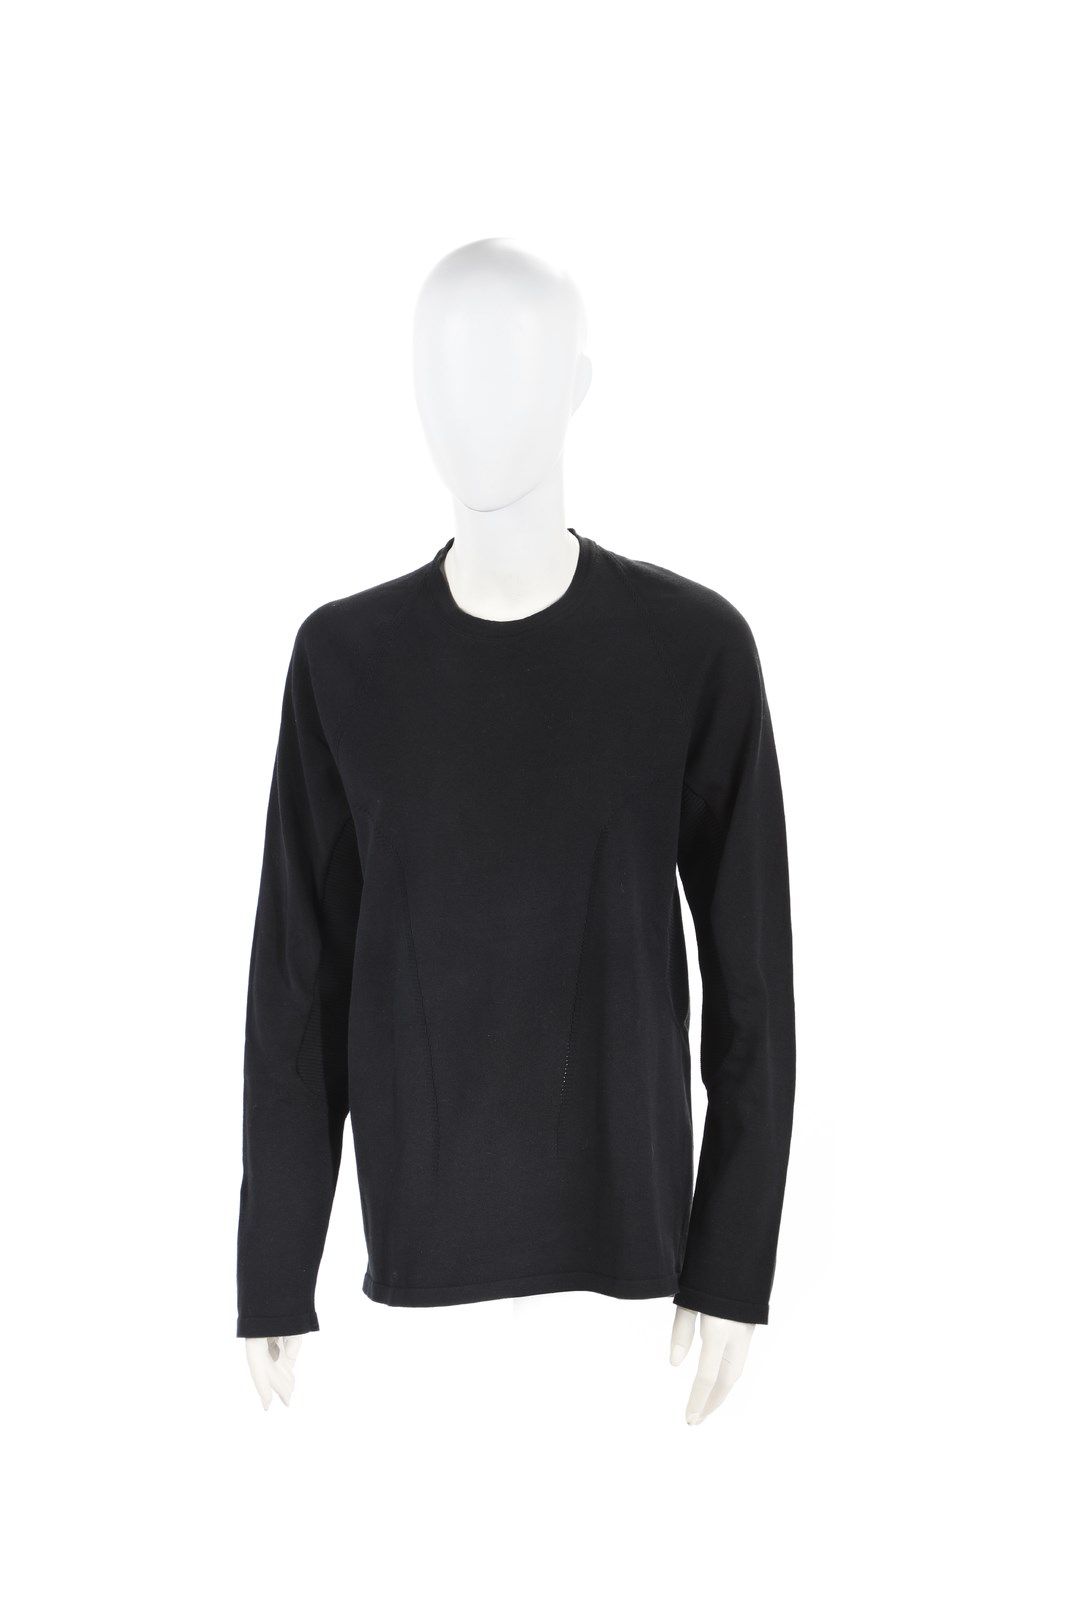 GIANFRANCO FERRE' Black wool sweater. 80's. 黑色羊毛衫。80's.羊毛... ...标签出示，意大利制造，尺寸52。